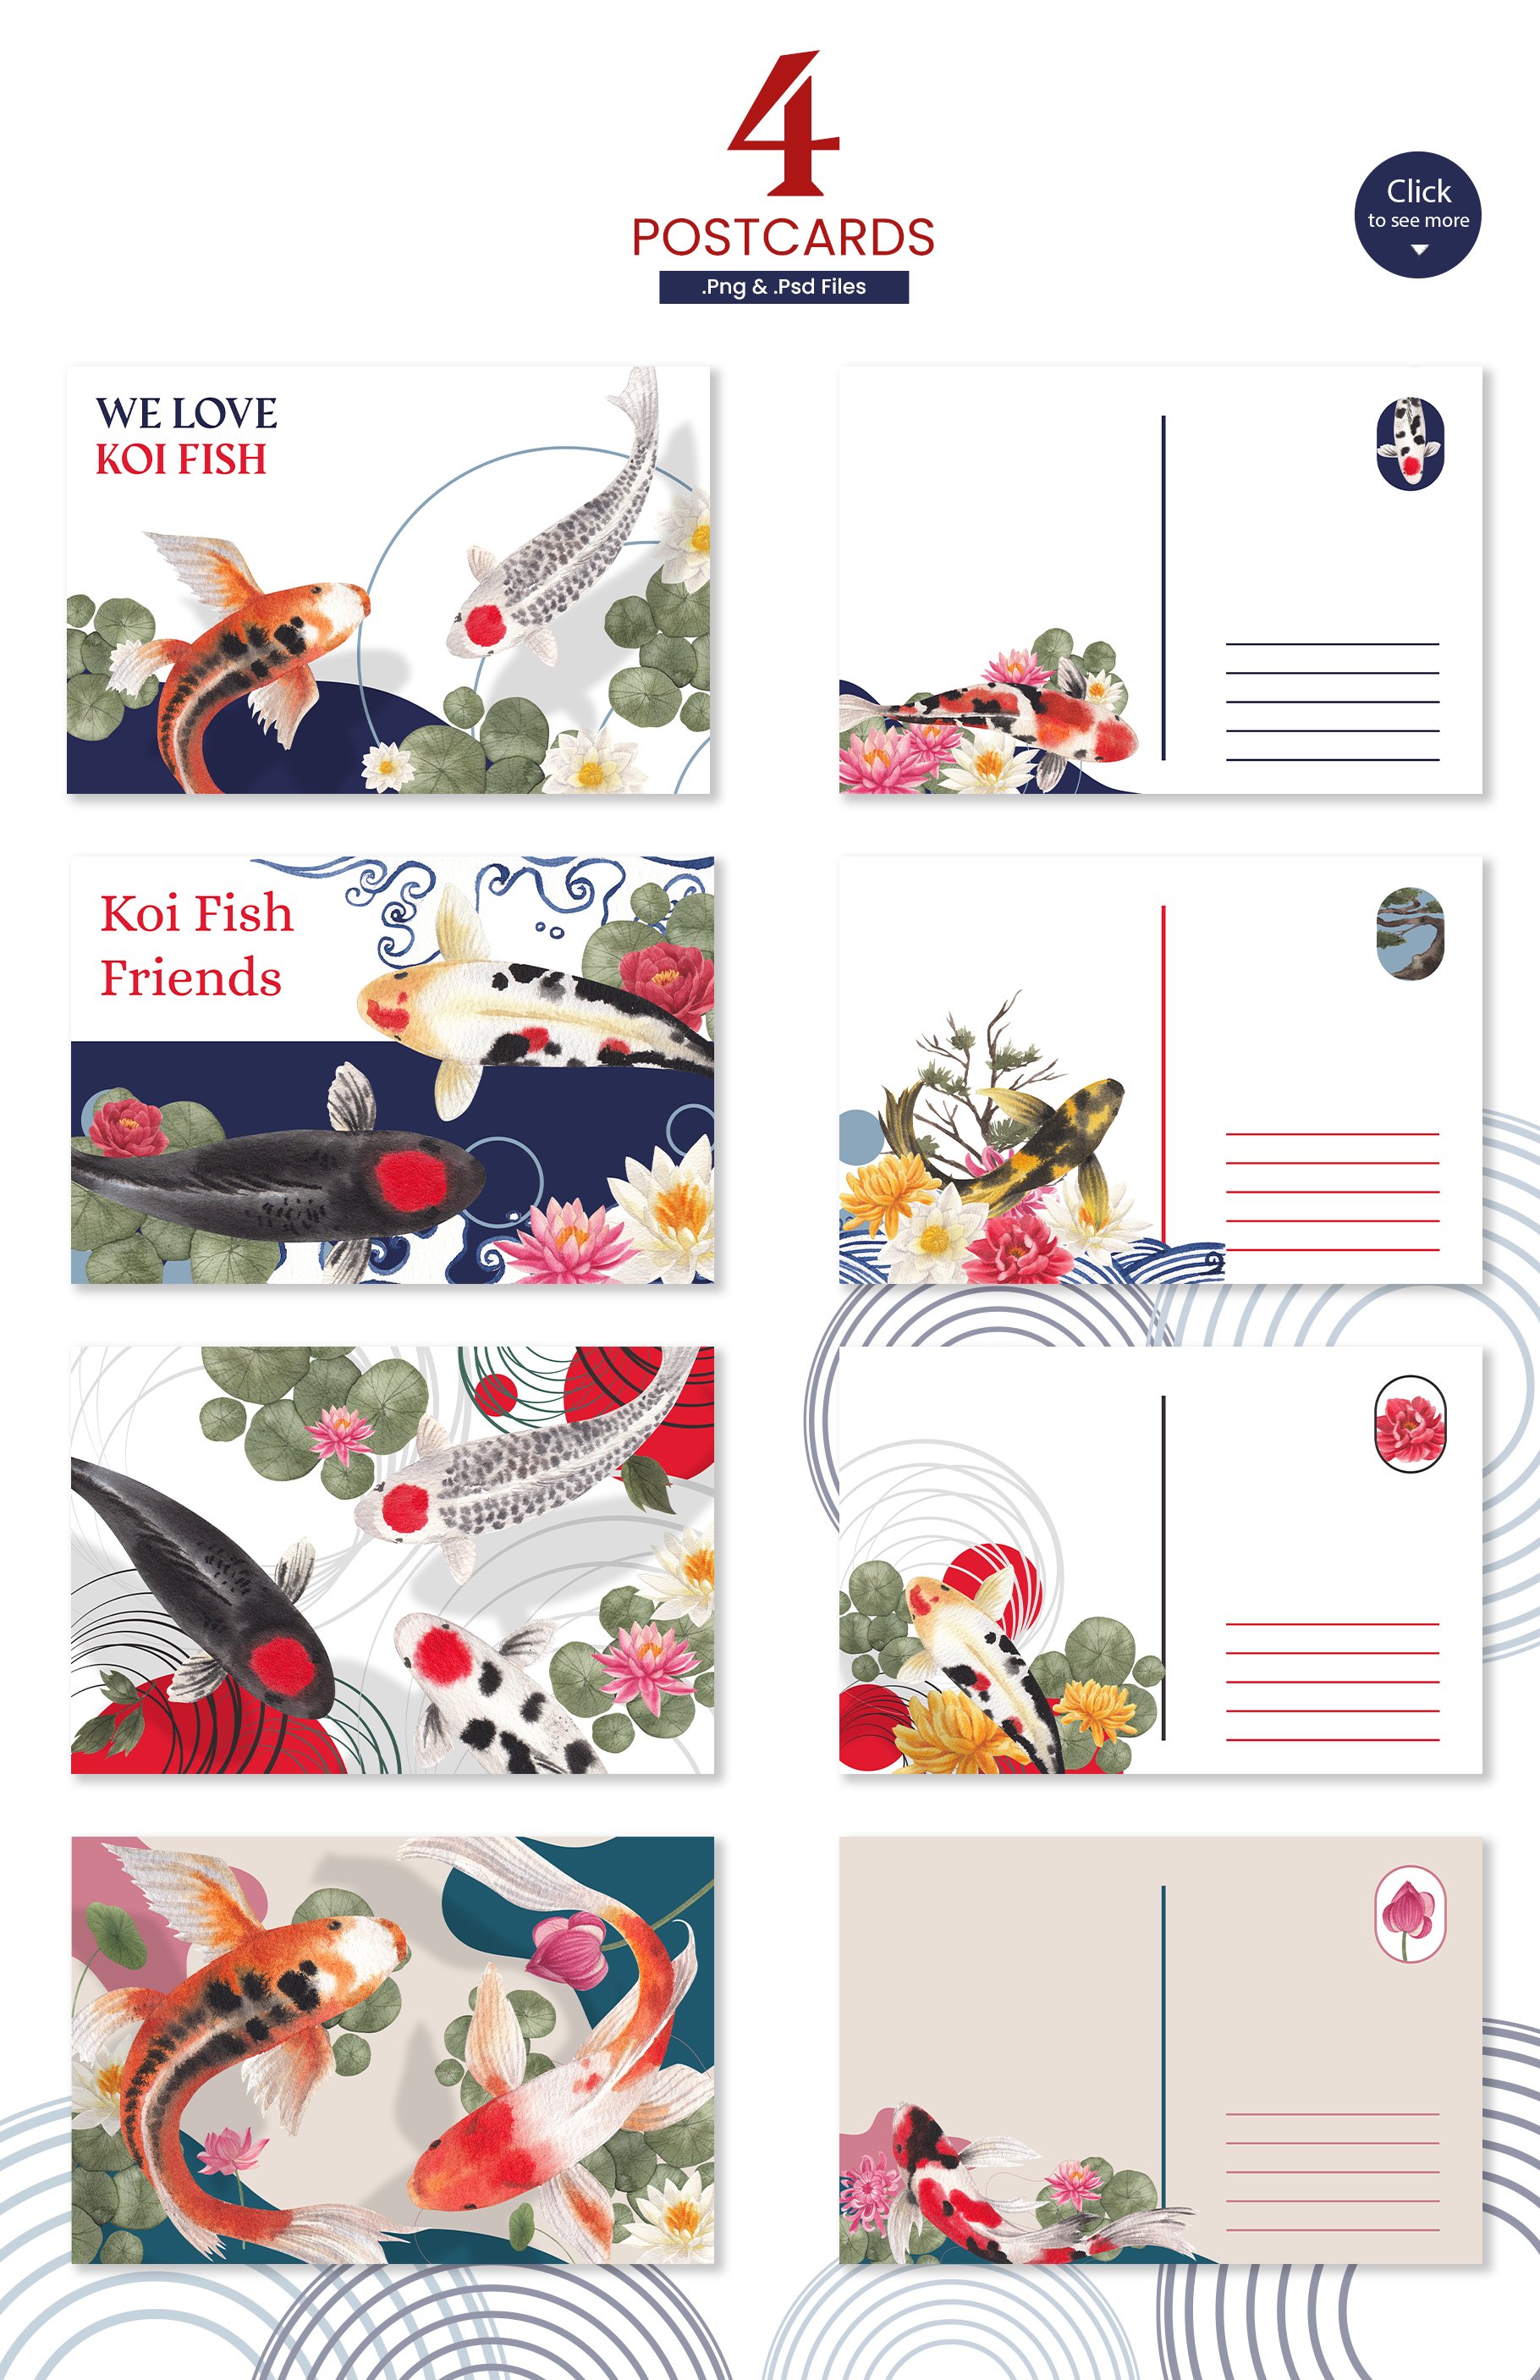 So bright koi fish postcards.